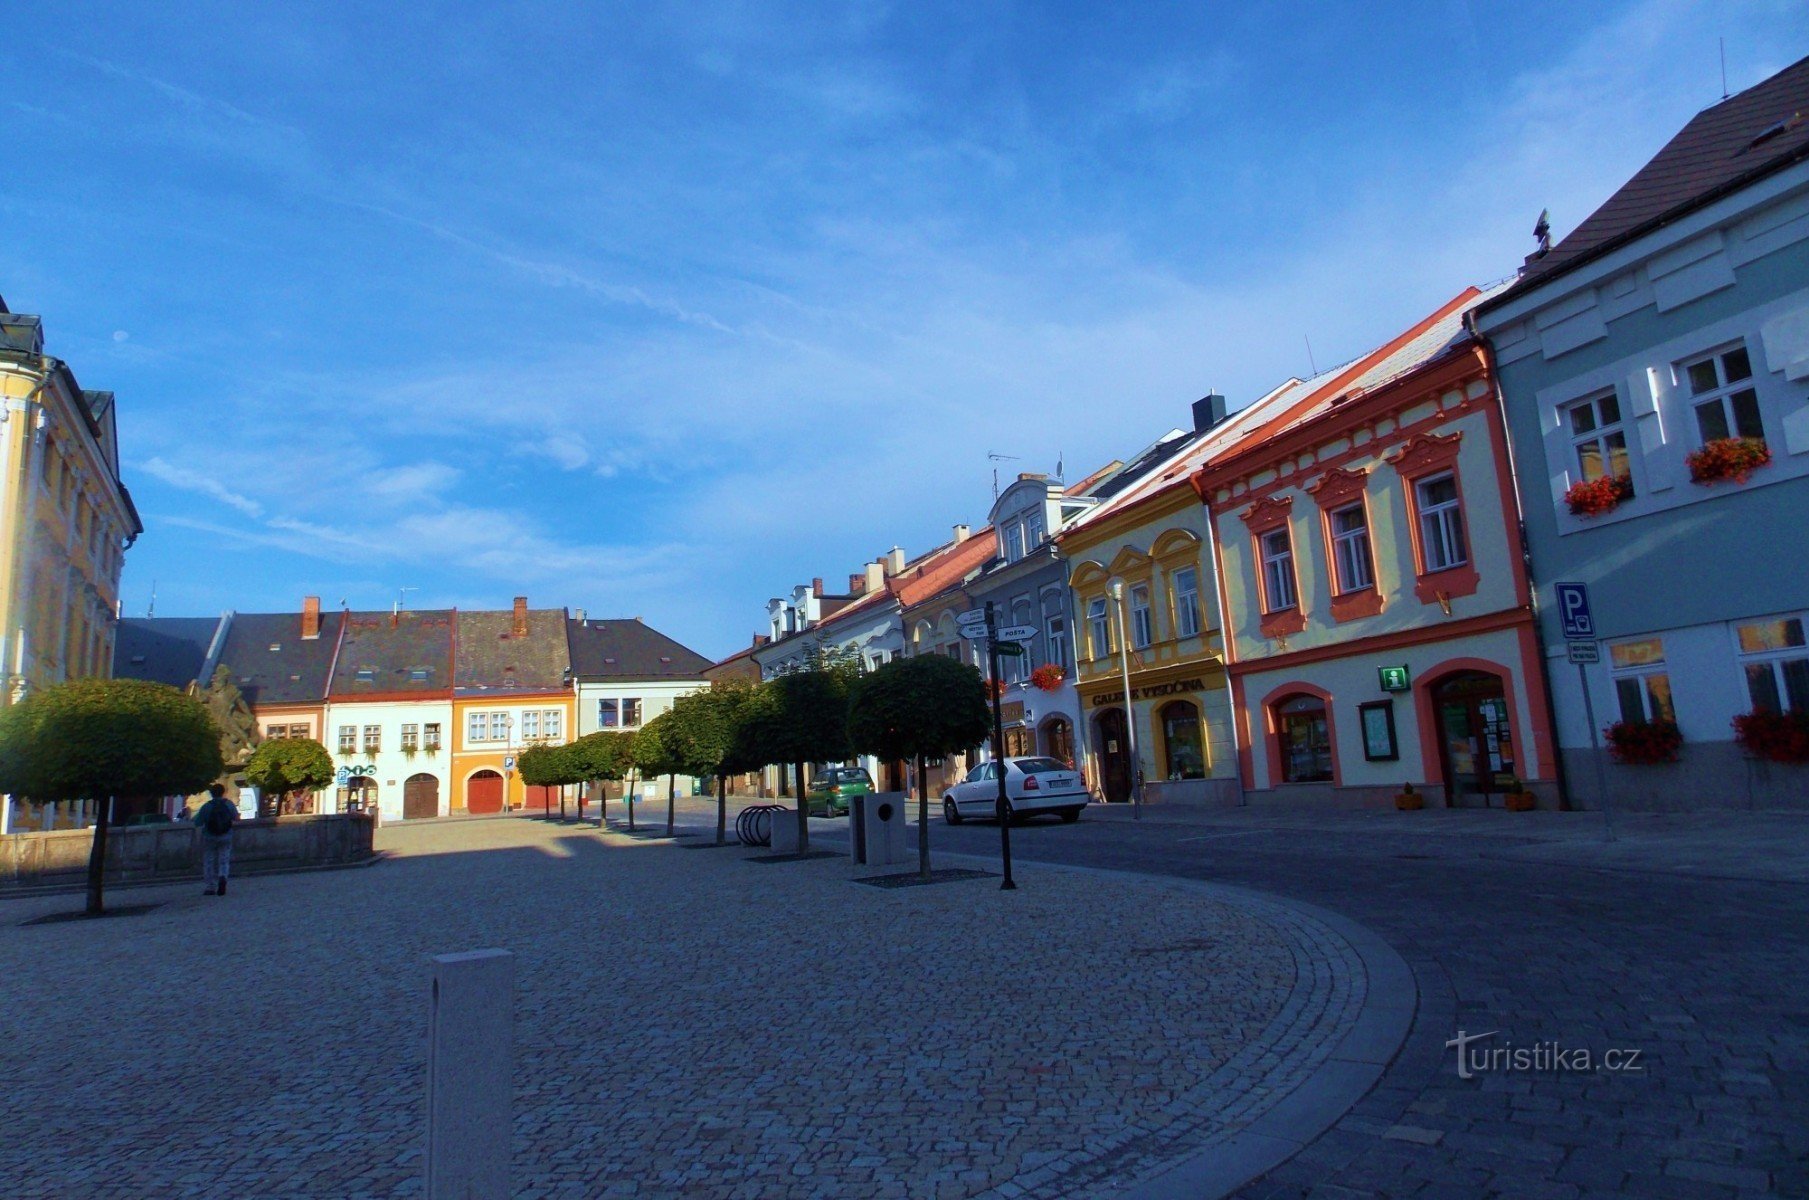 Palackého náměstí în orașul regal - Polička